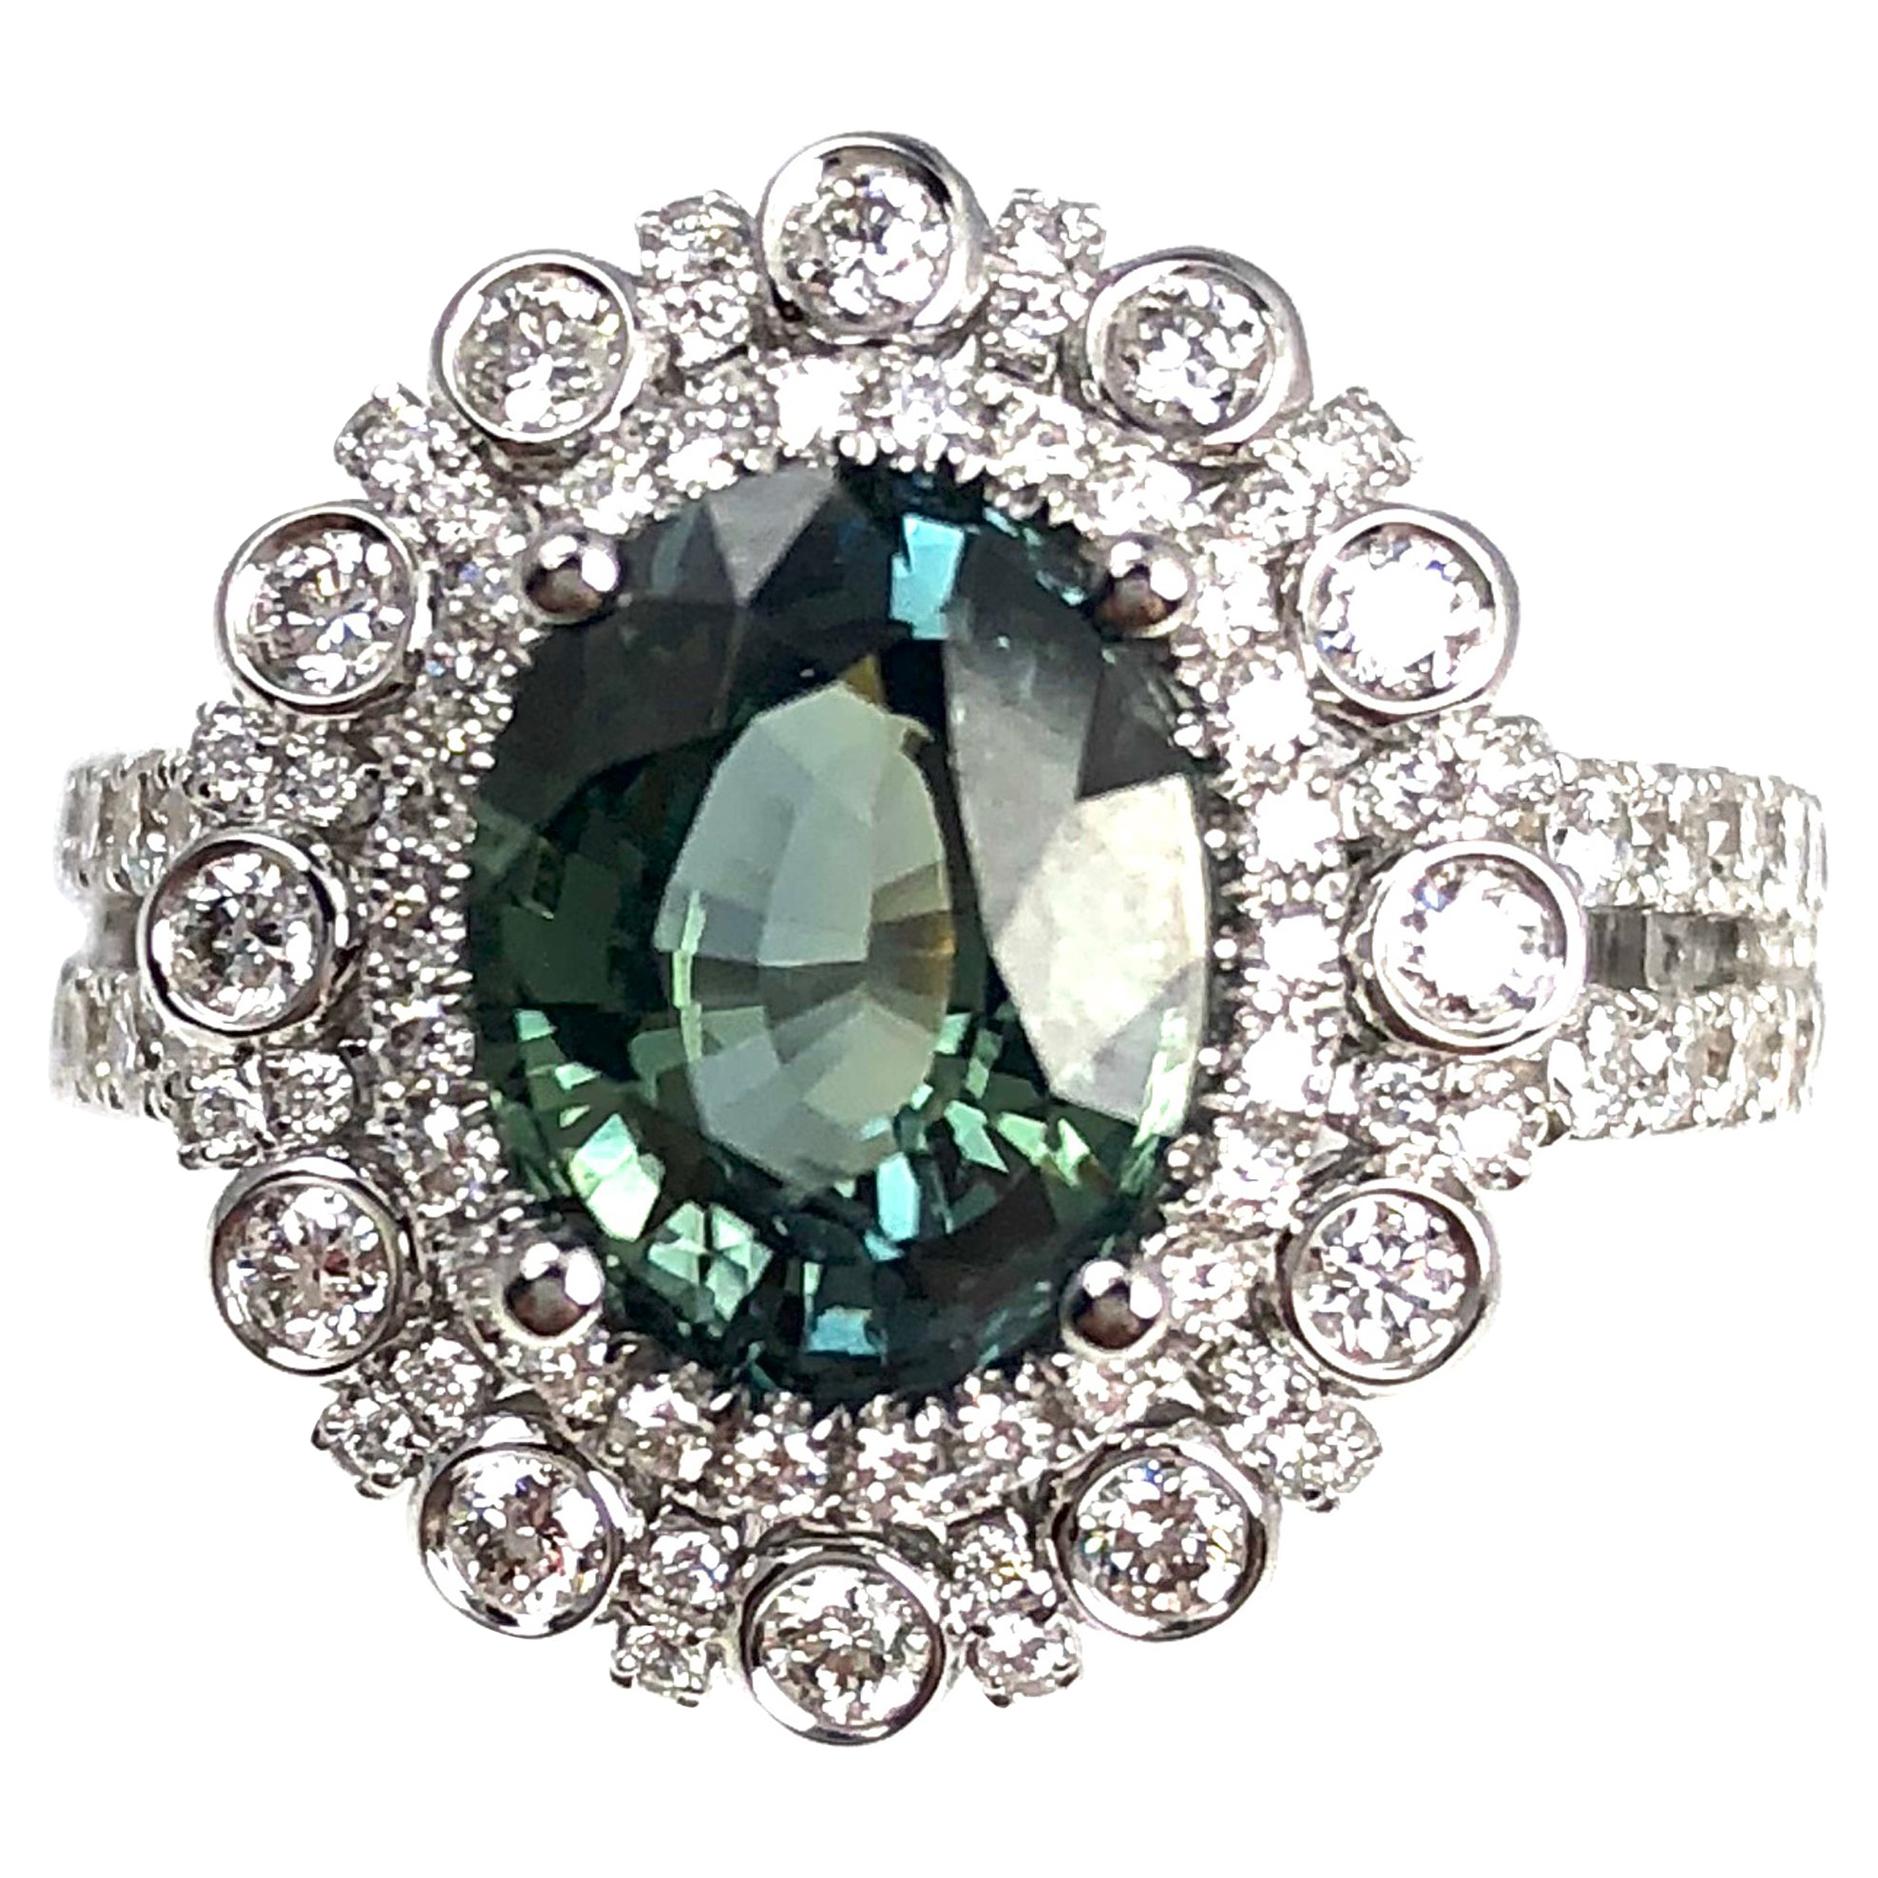 2.60 Carat Oval Cut Green Sapphire and 1.03 Carat Diamond Ring in 18 Karat Gold